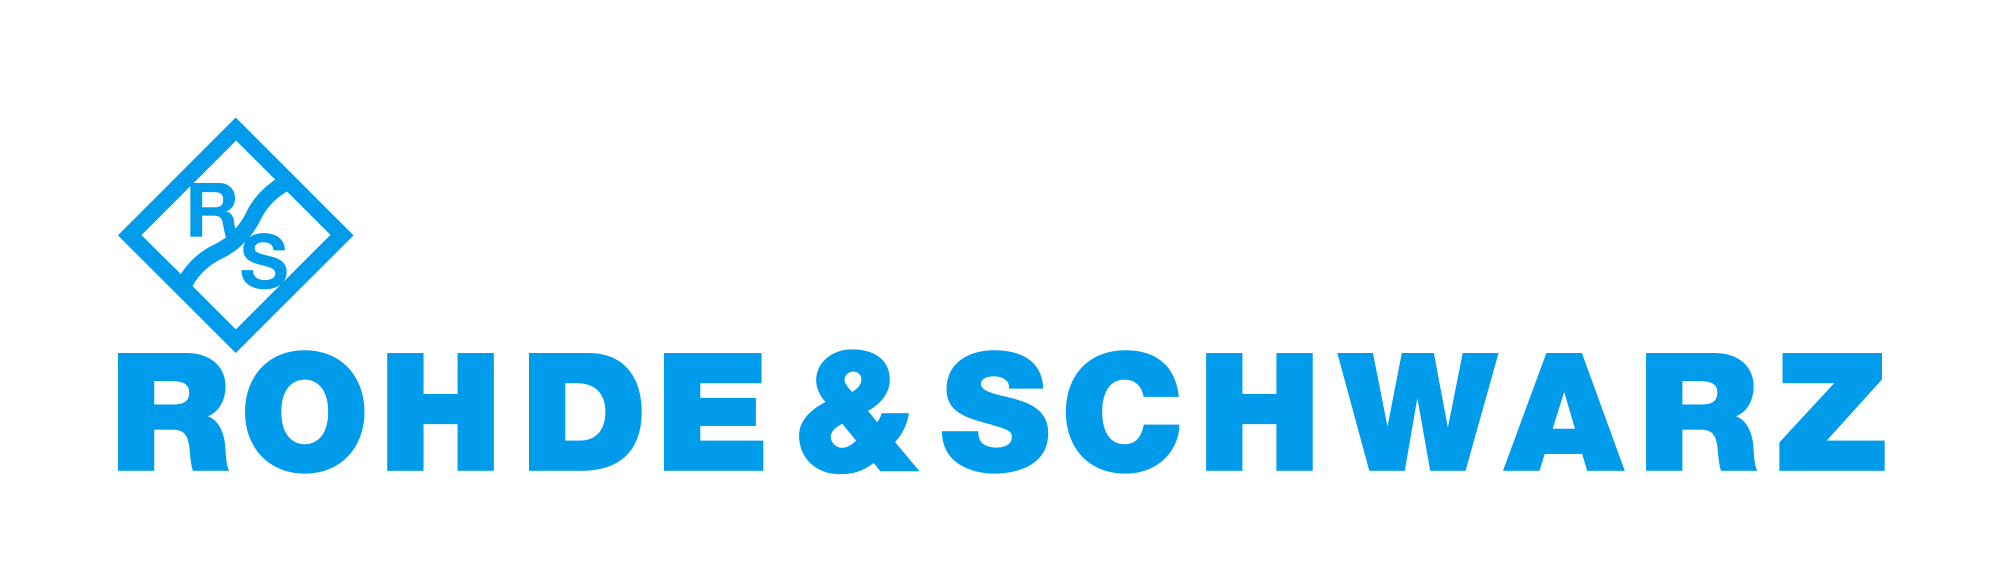 Rohde&Schwarz - Роде и Шварц Рус